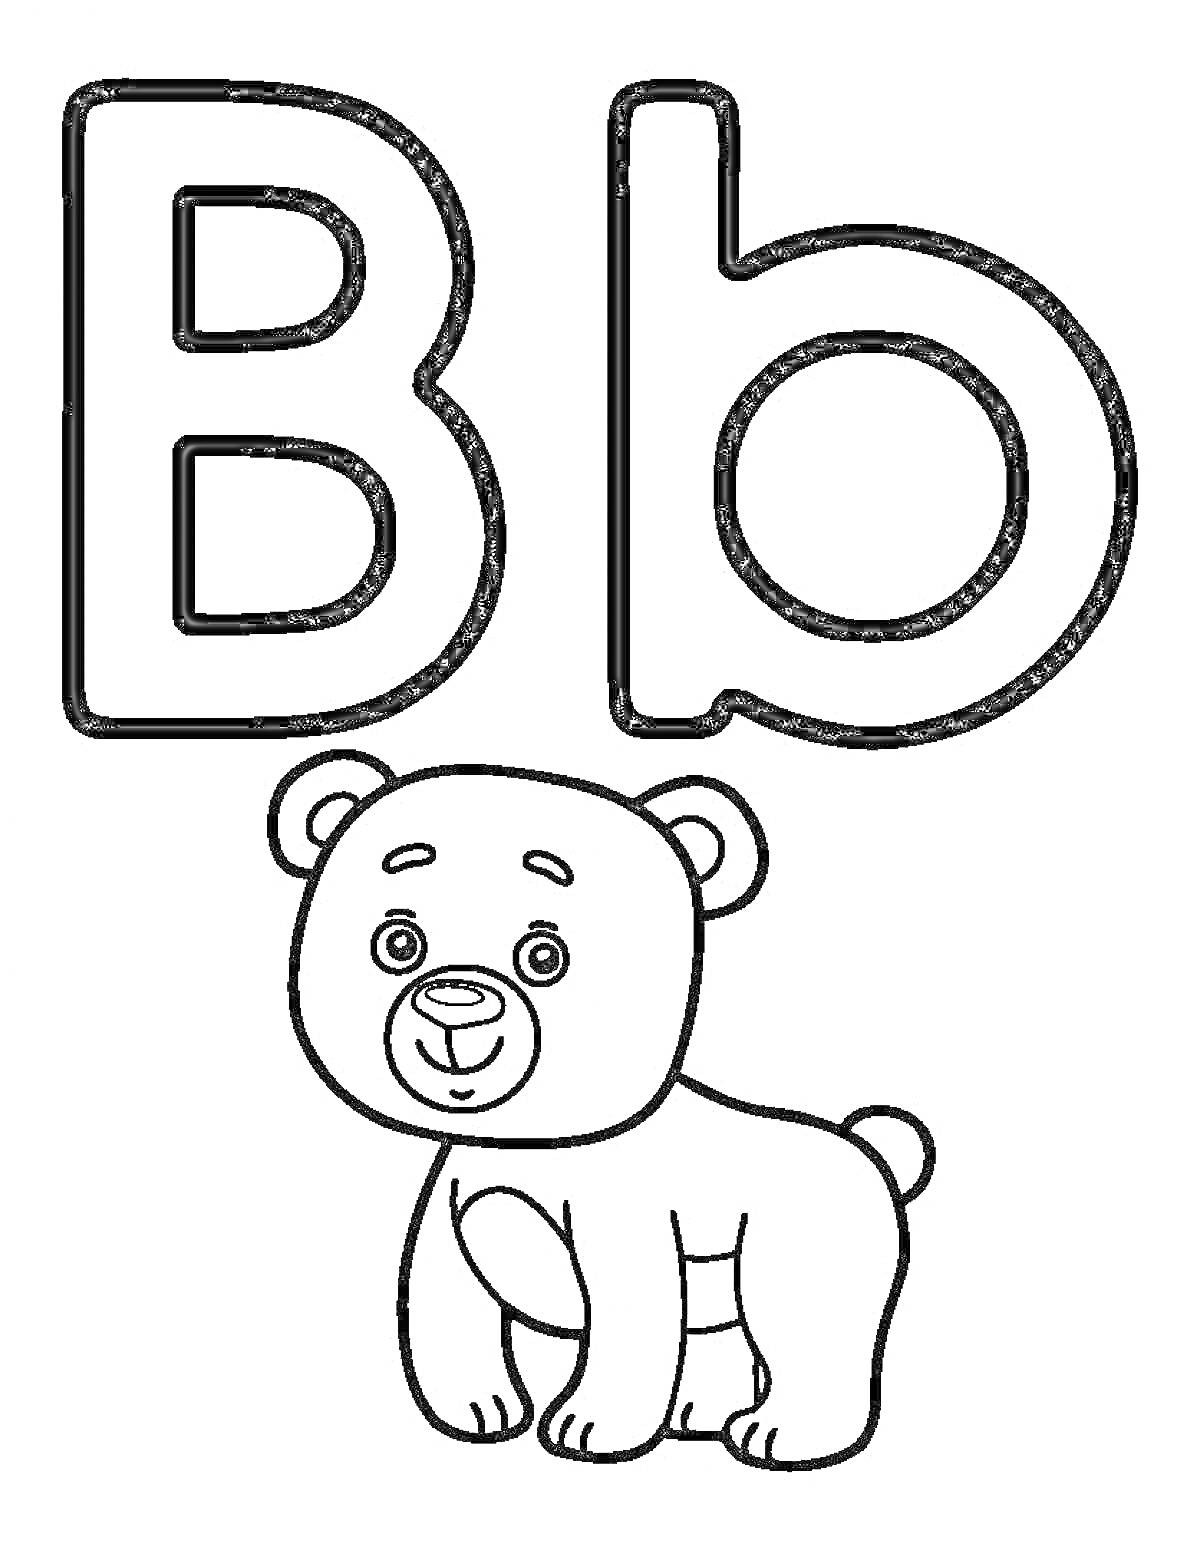 На раскраске изображено: Буква b, Алфавит, Английский язык, Медведь